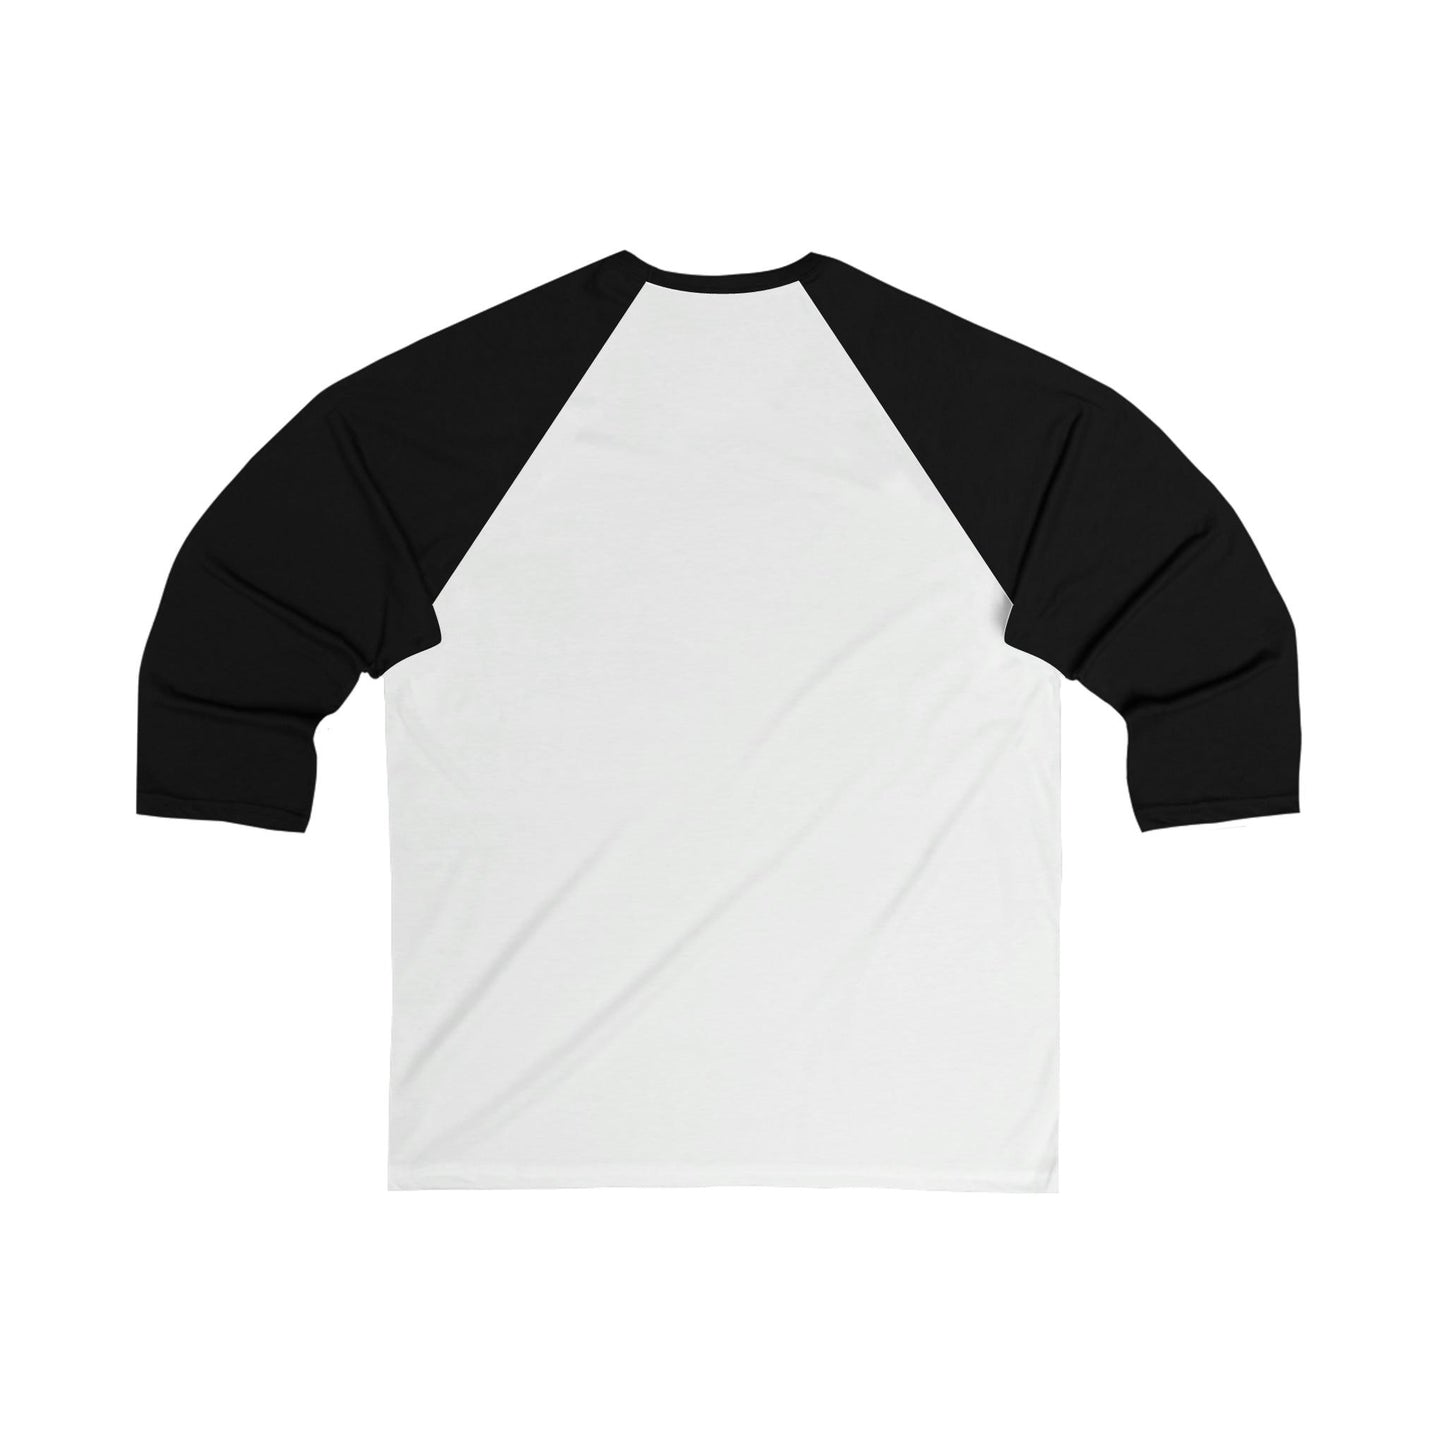 Baseball Season Baseball Tee - sports shirt - gift for baseball lovers - Giftsmojo